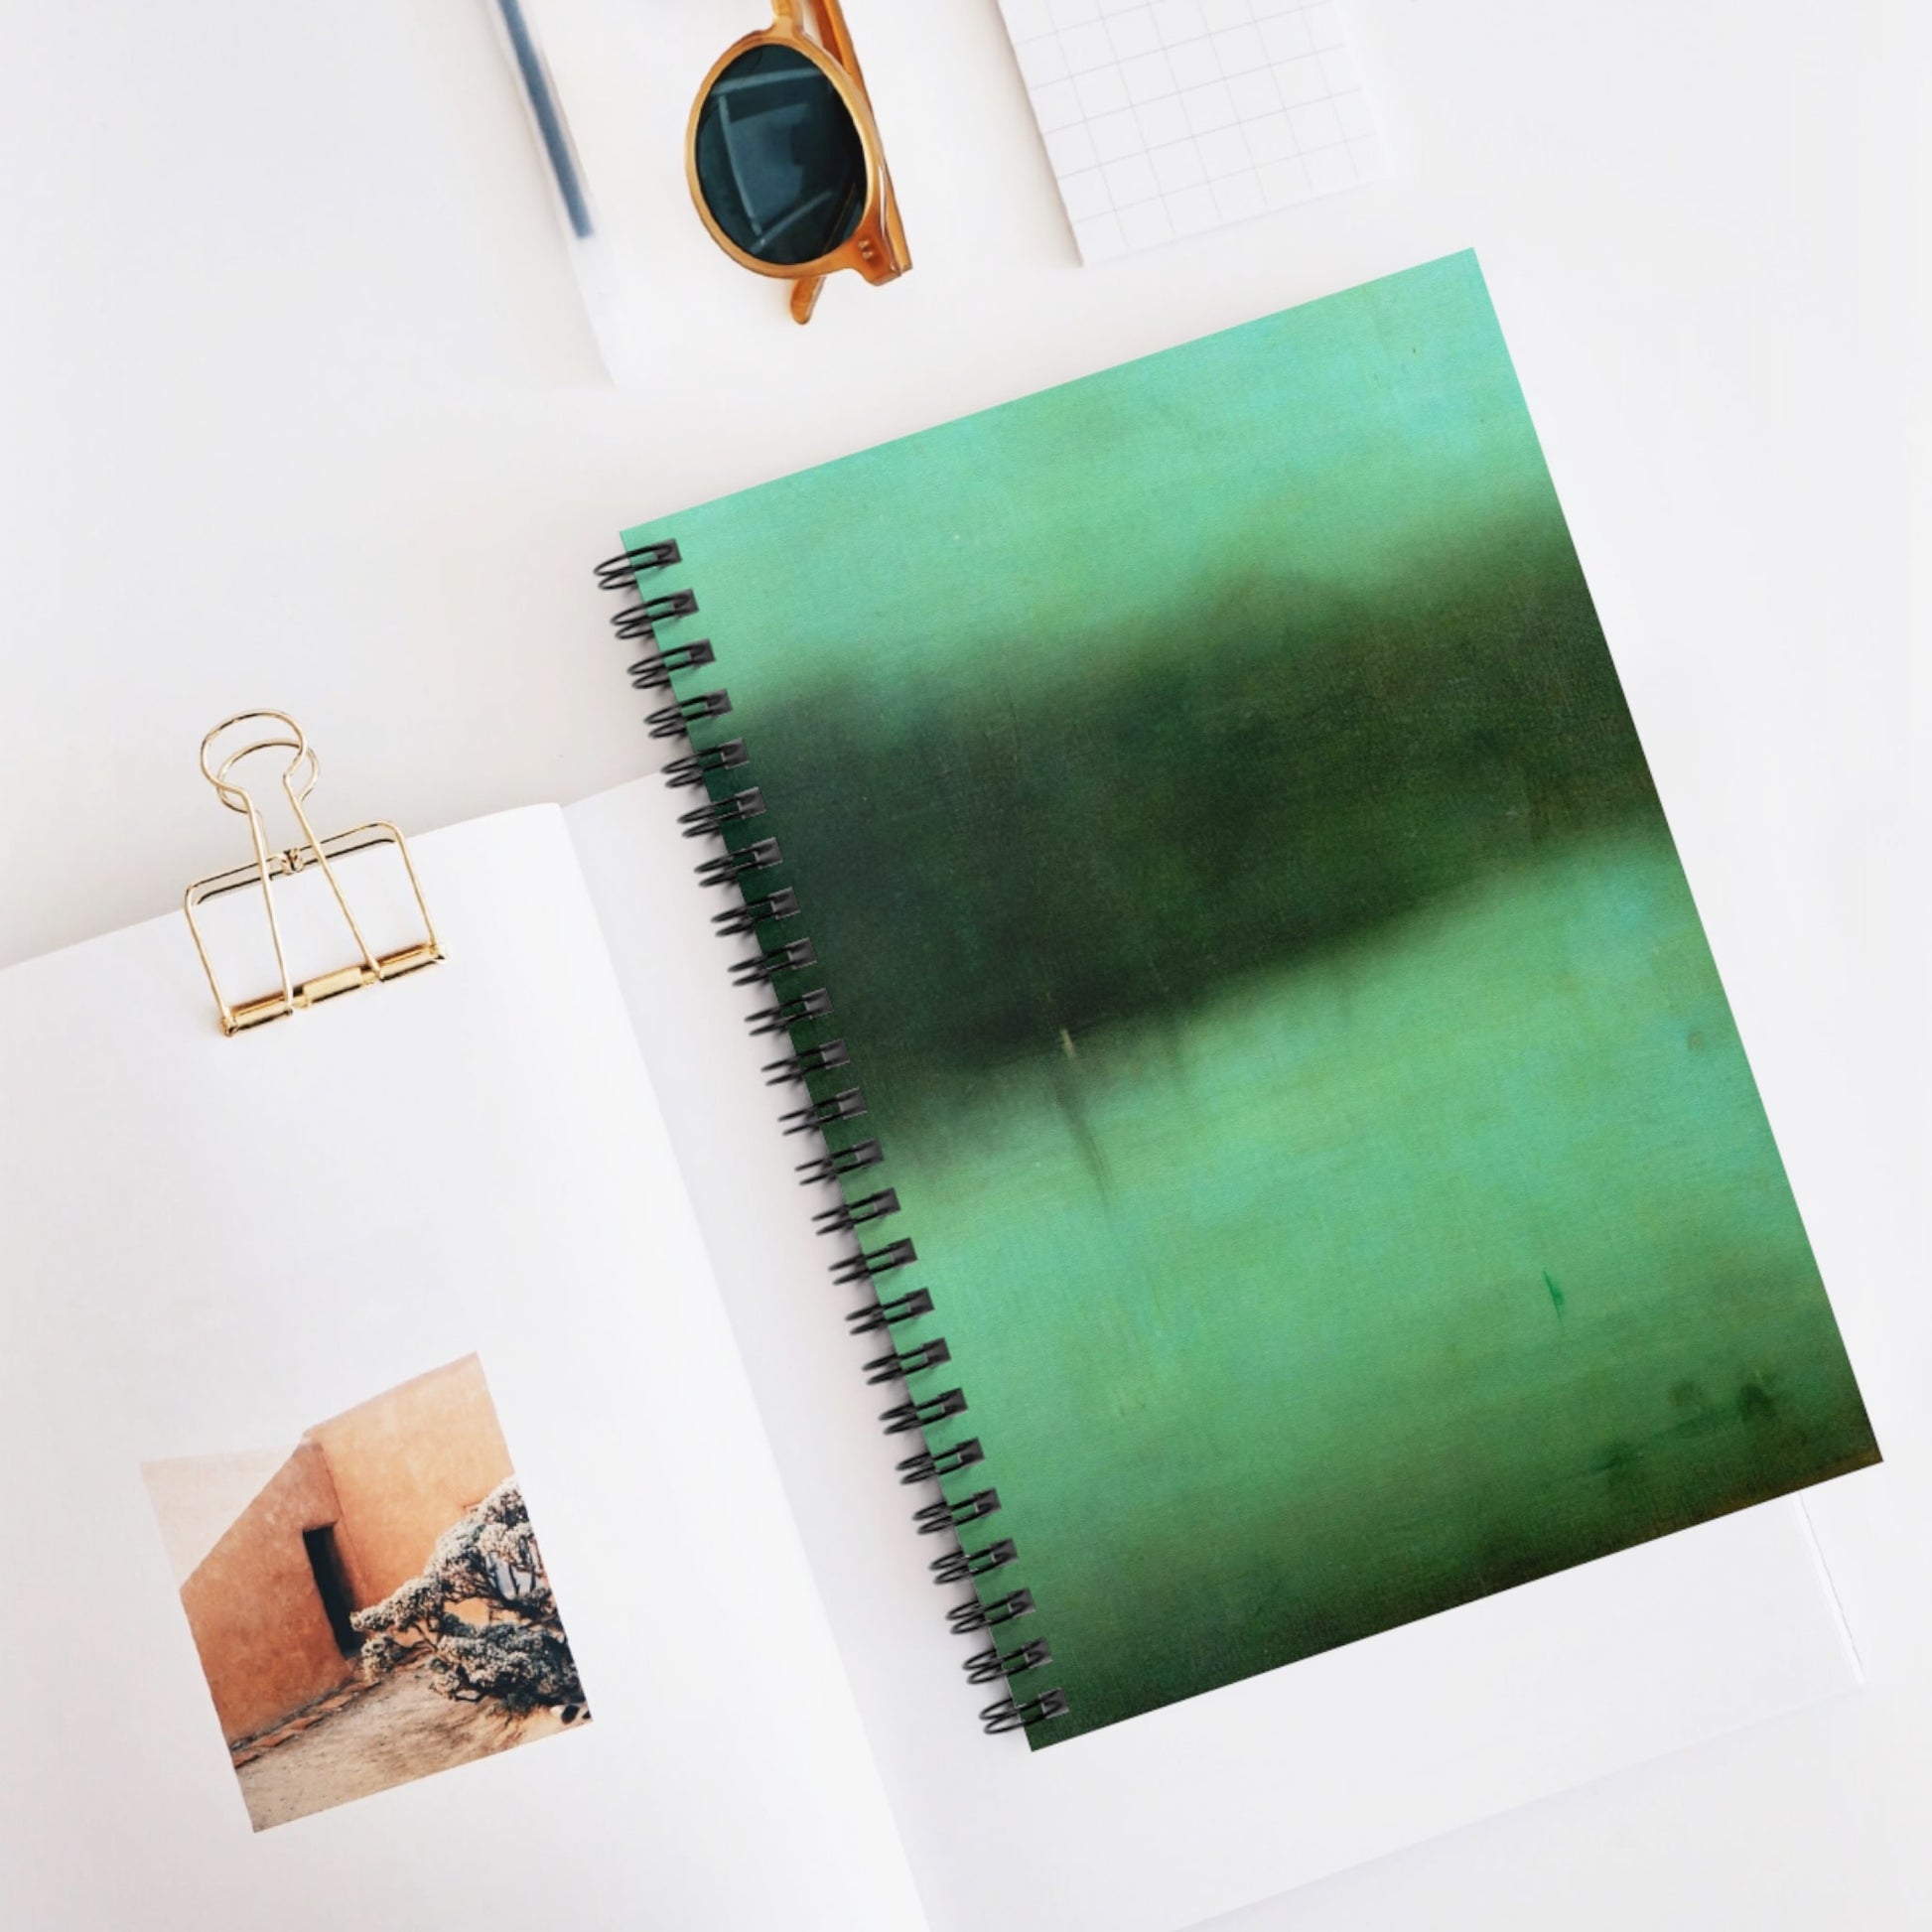 Black and Green Spiral Notebook Displayed on Desk